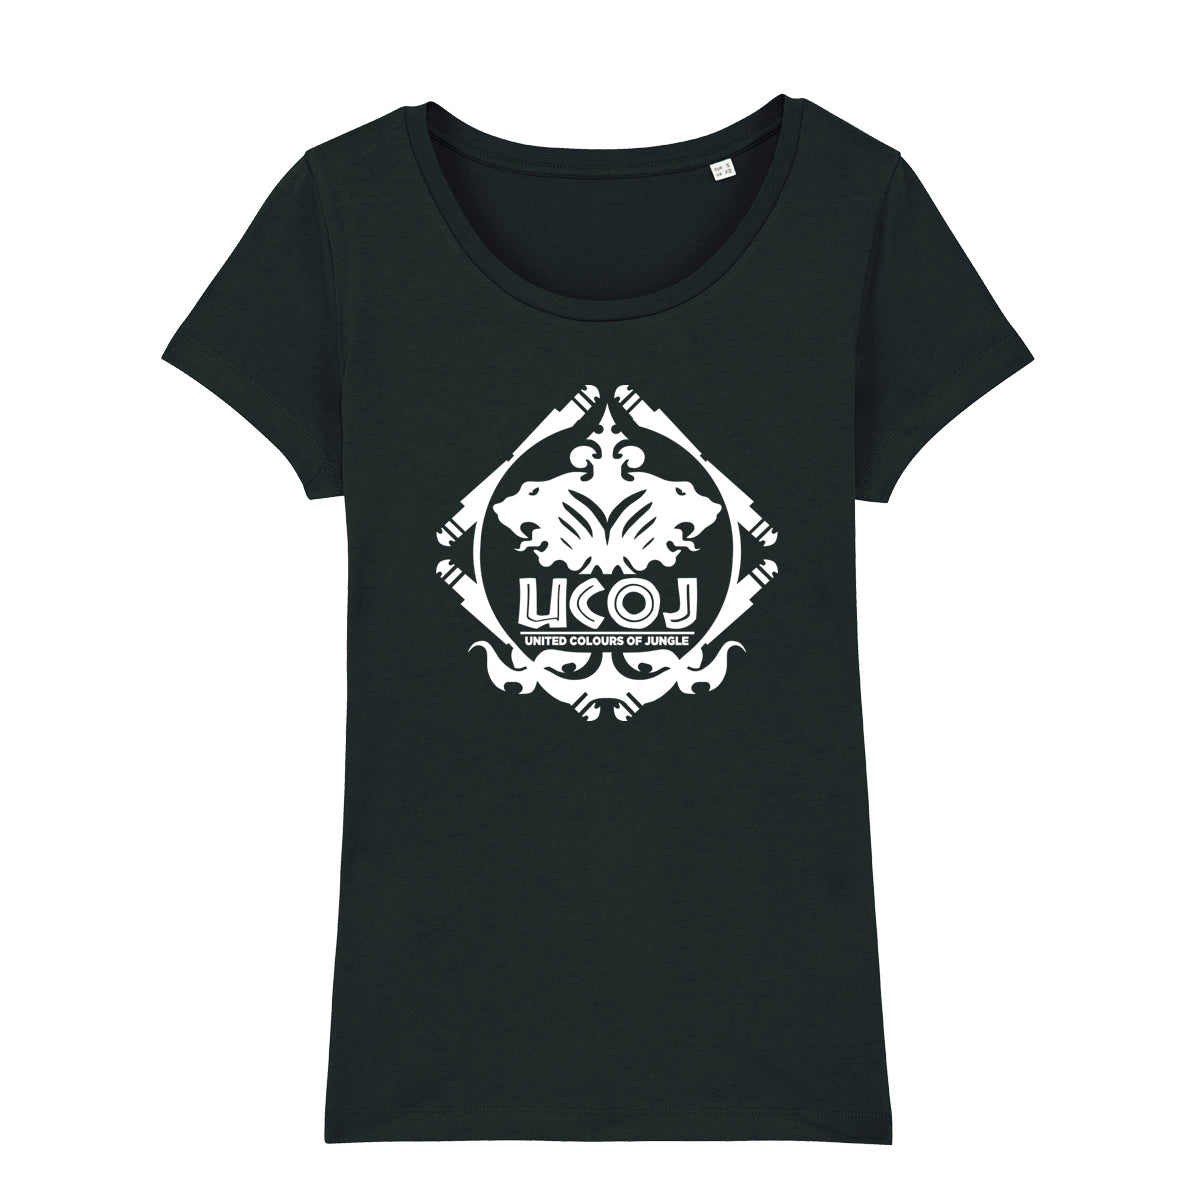 UCOJ Women's T-Shirt